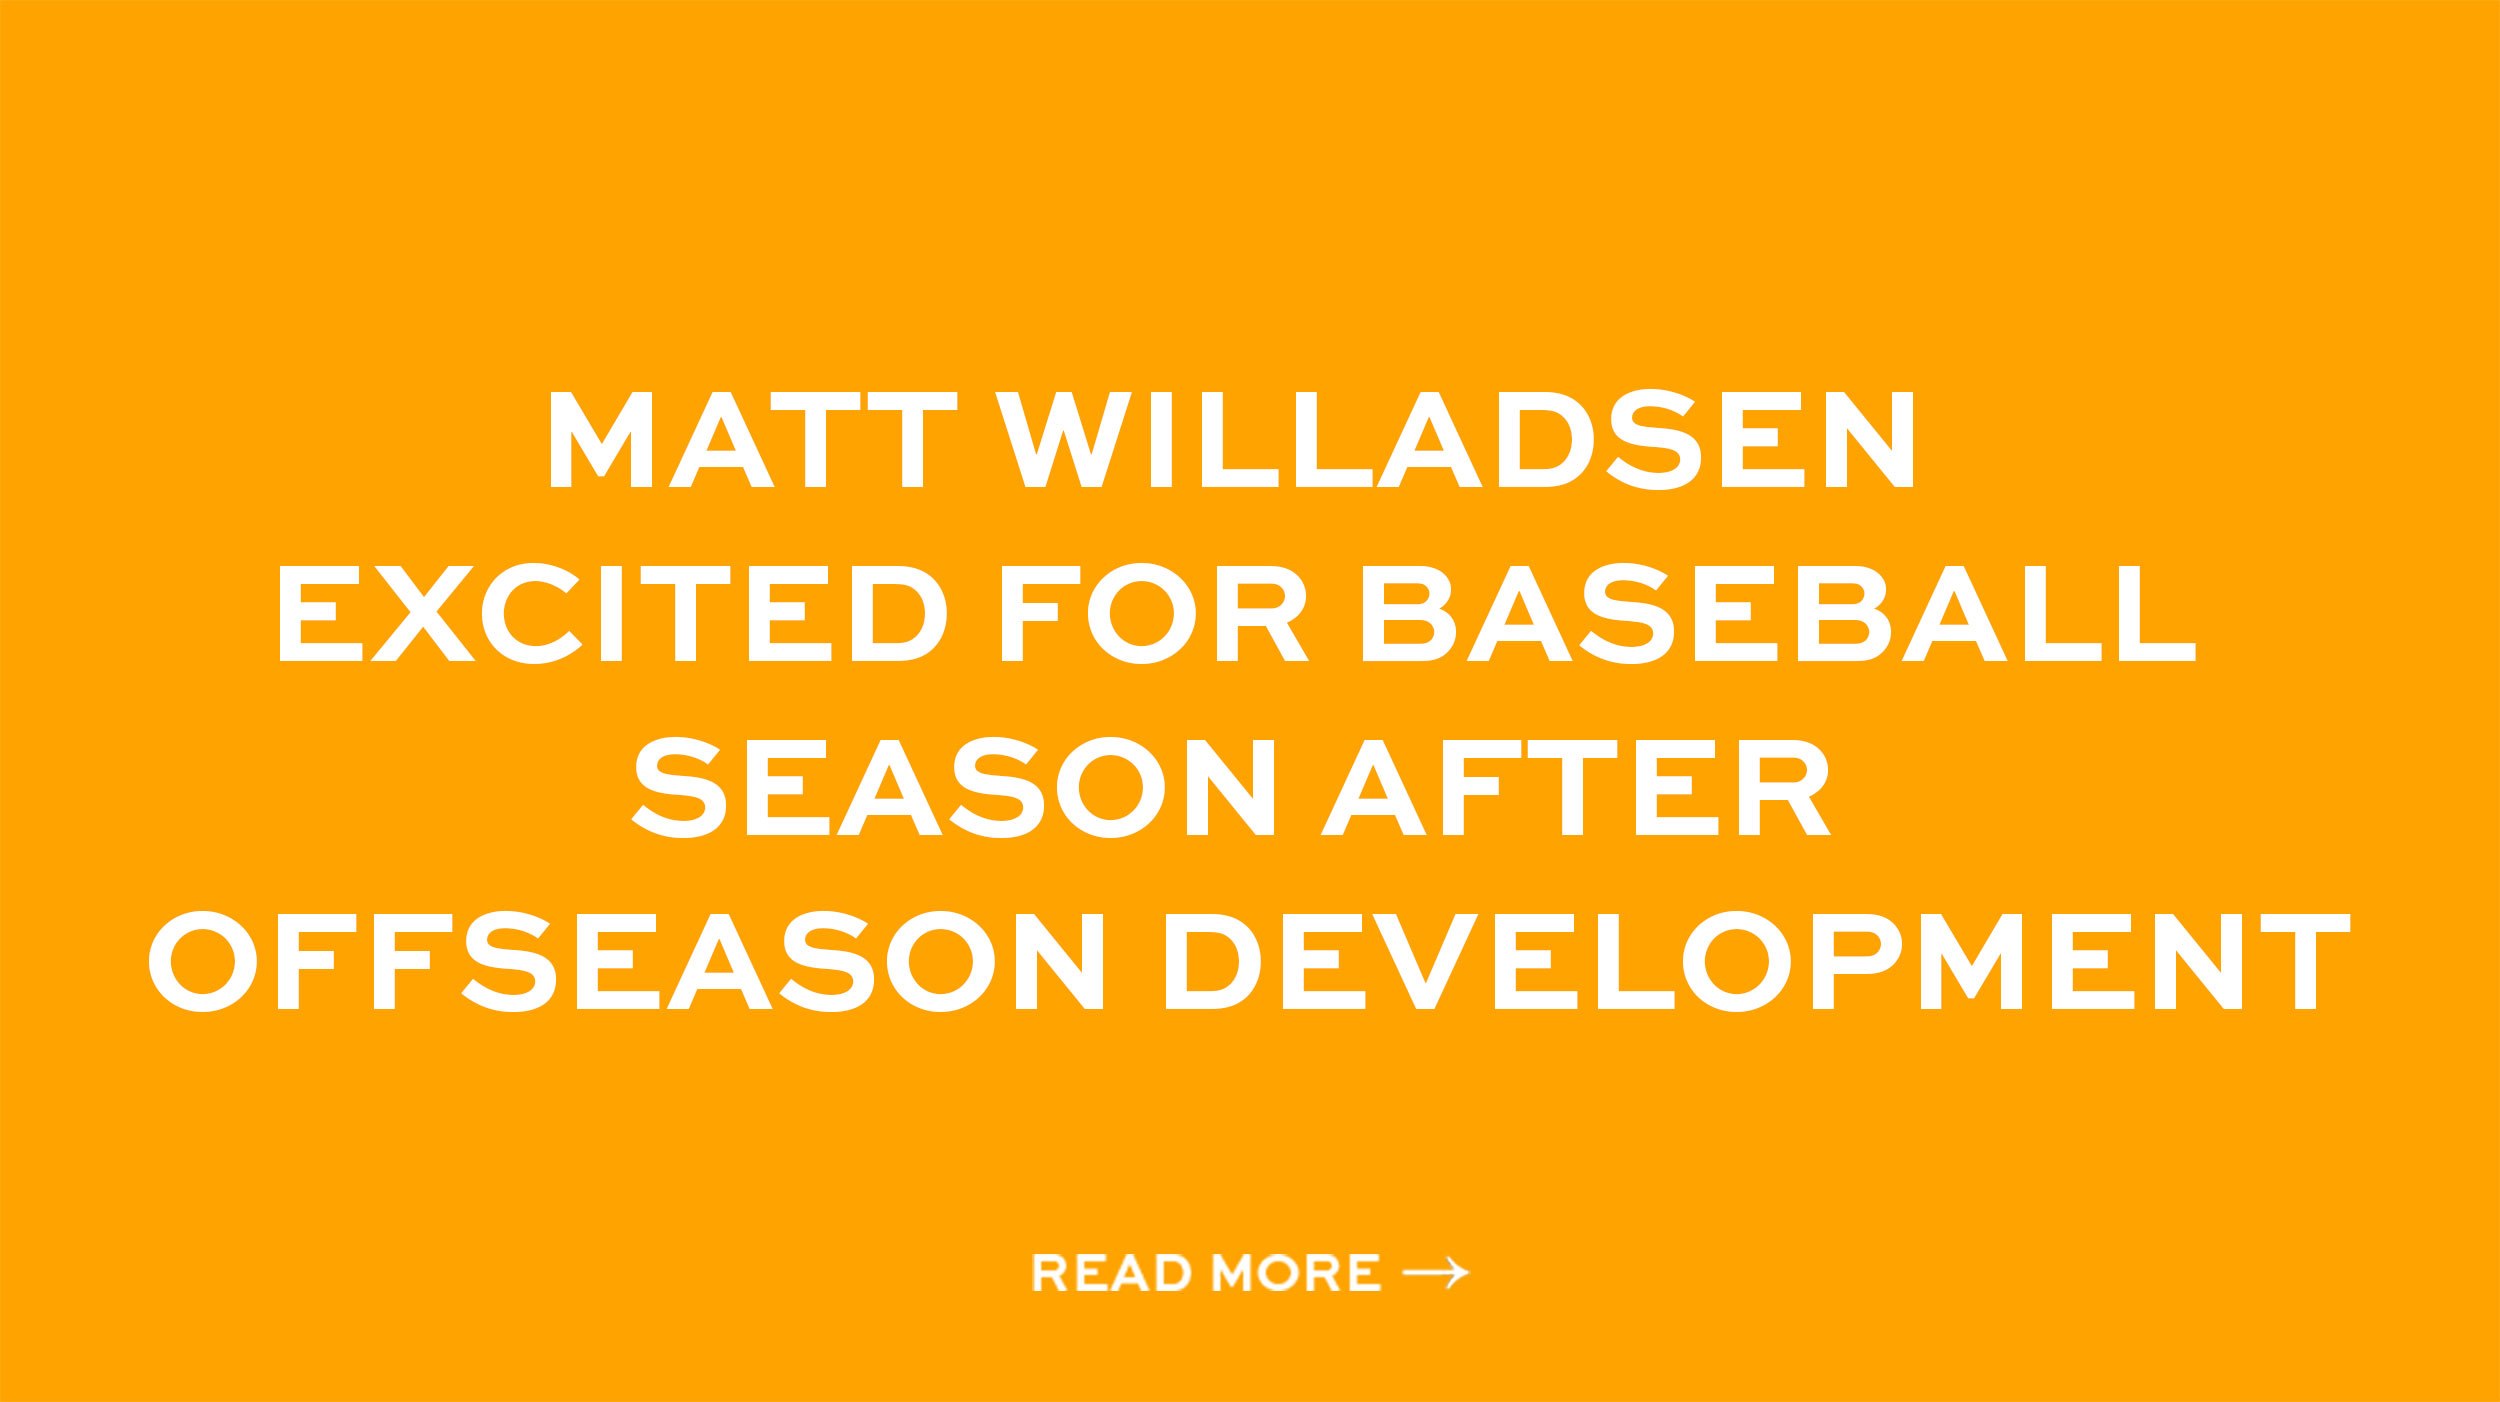 Matt Willadsen excited for baseball season after offseason development